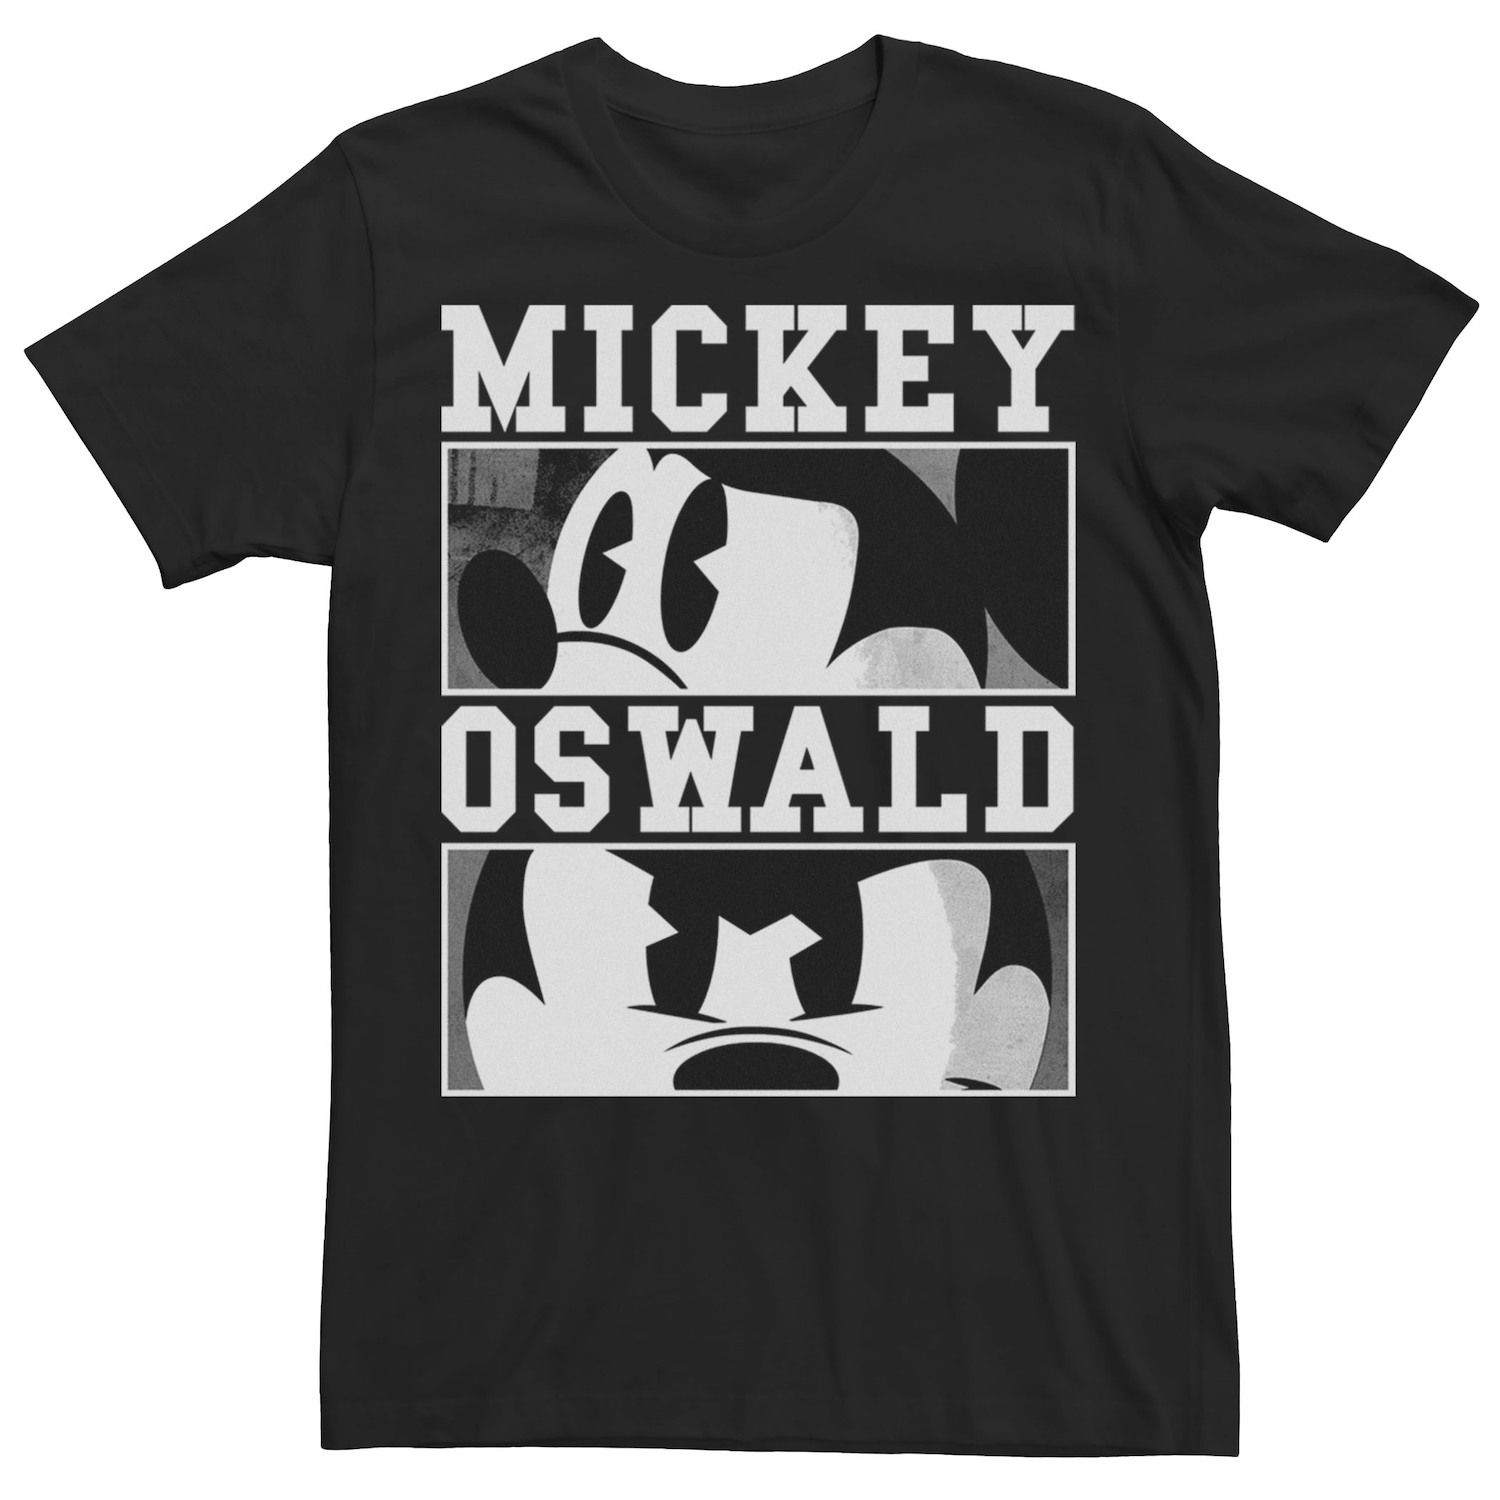 Мужская футболка Disney Epic Mickey And Oswald со вставками Licensed Character мужская футболка disney epic mickey and oswald со вставками licensed character